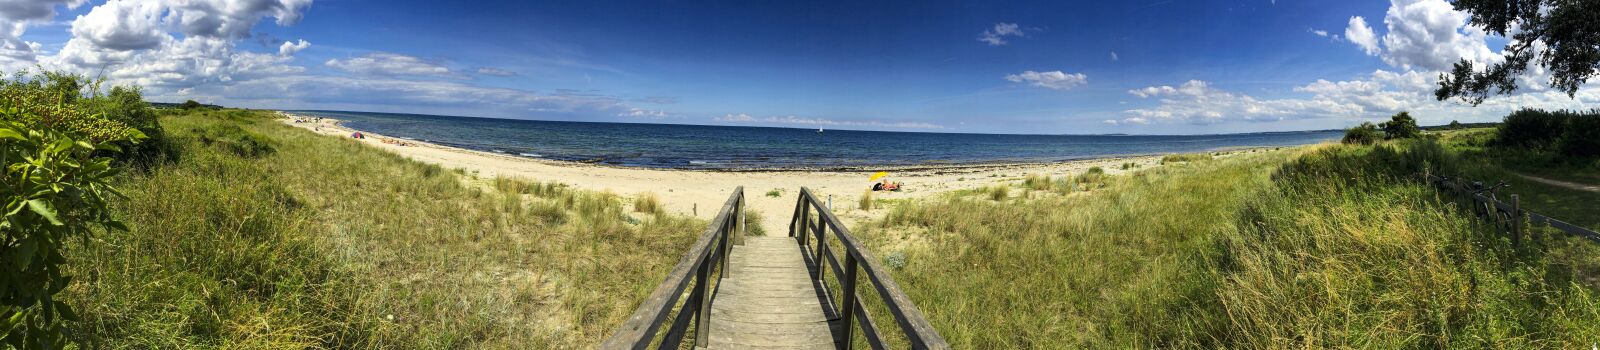 iPhone 6 back camera 4.15mm f/2.2 sample photo. Baltic sea, beach, nudist photography